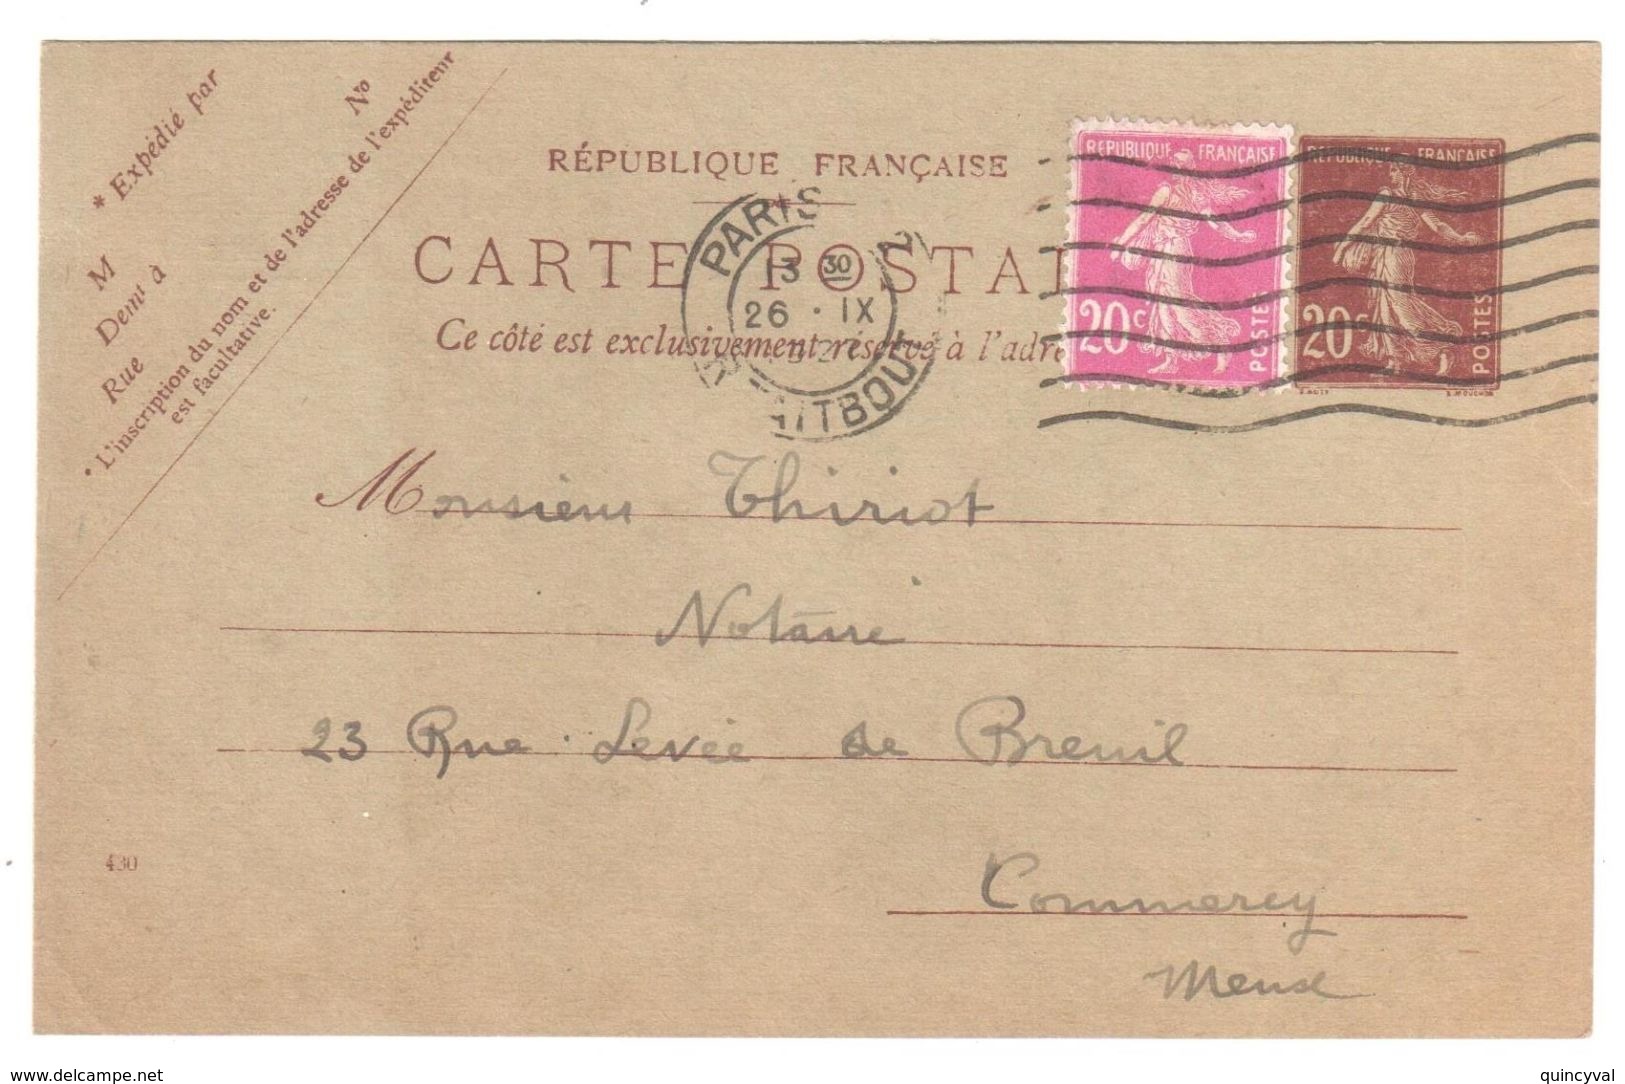 PARIS Carte Postale Entier 20c Semeuse Compl 20c Yv 139-CP1 H1 190 Mill 430 Repiqué Verso Dos Monnaie Numi CIANI Ob 1927 - Overprinter Postcards (before 1995)